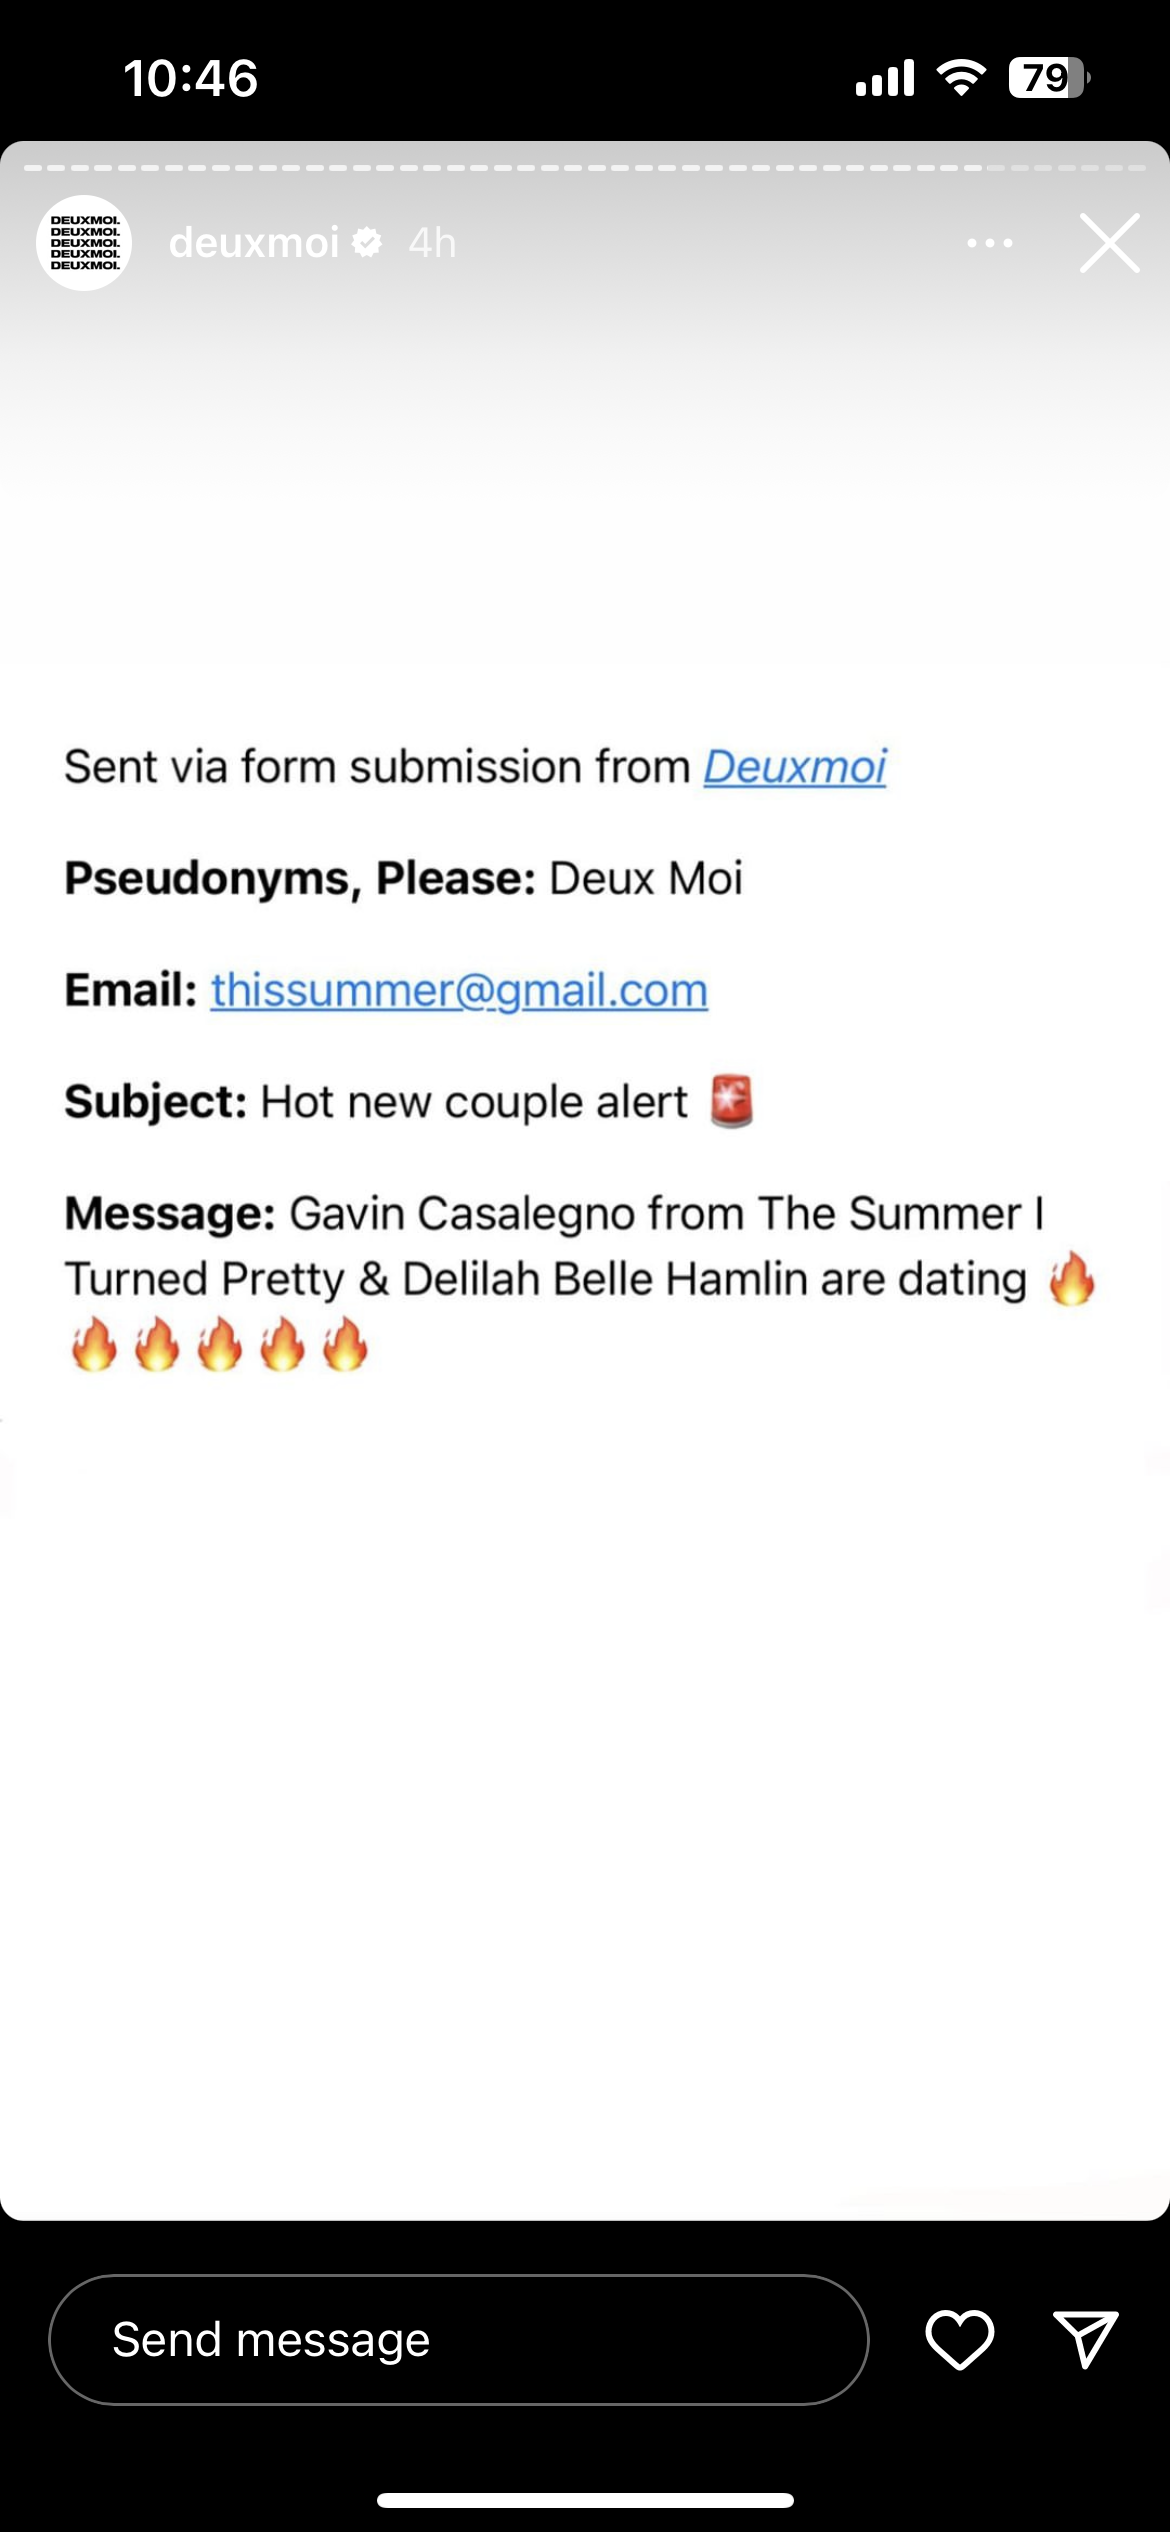 Deuxmoi revealed Gavin Casalegno and Delilah Belle Hamlin are dating. 